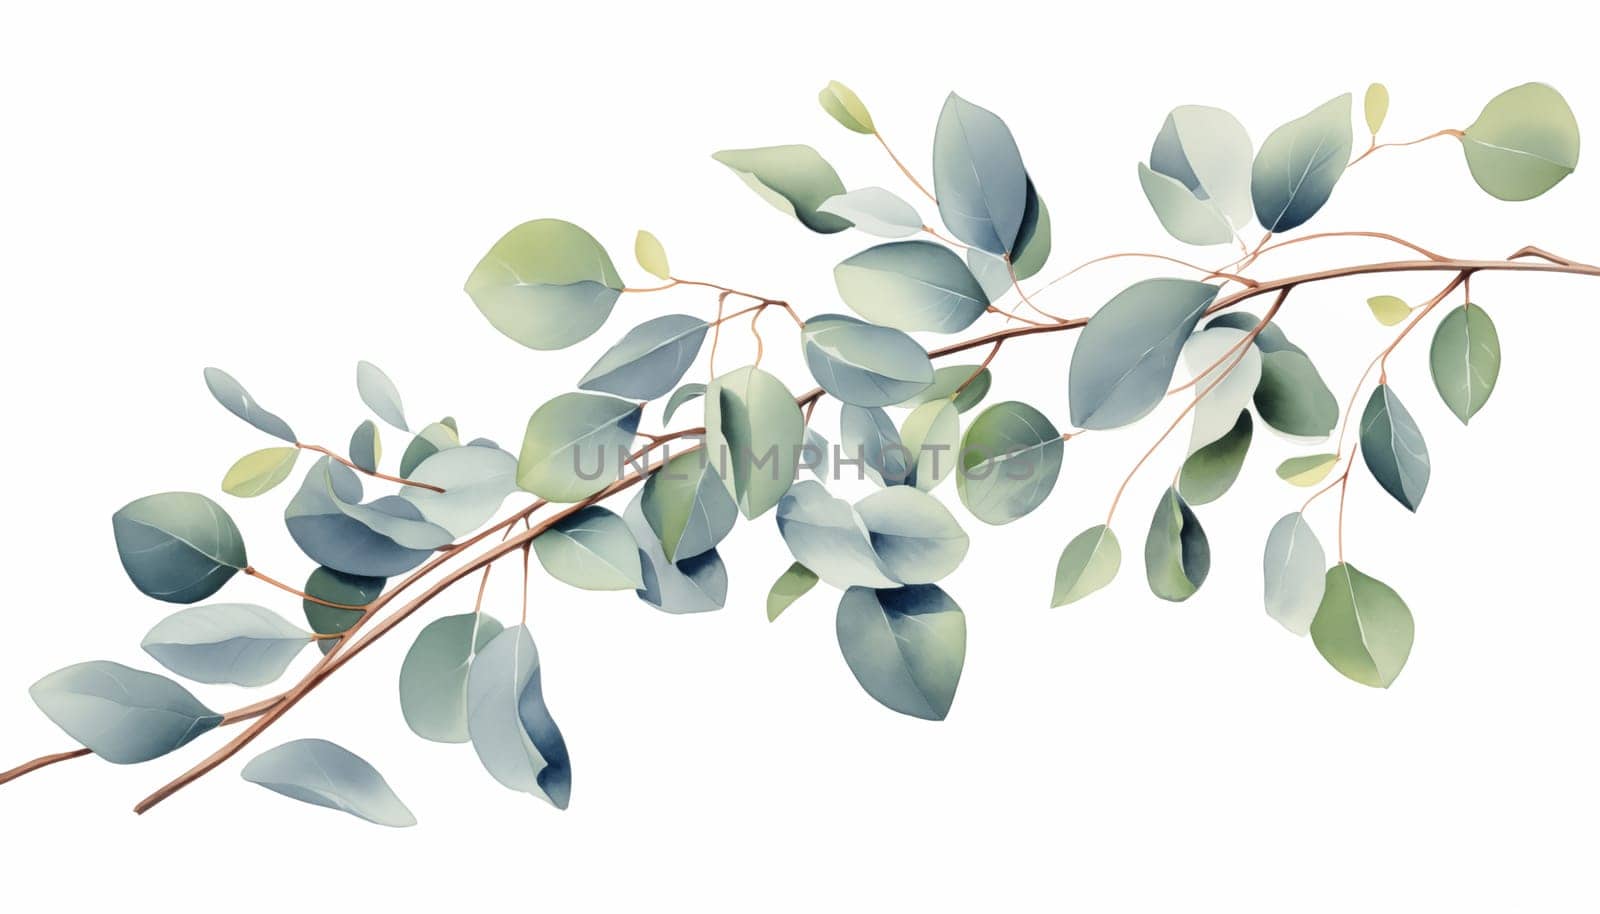 Watercolor Eucalyptus. High quality photo